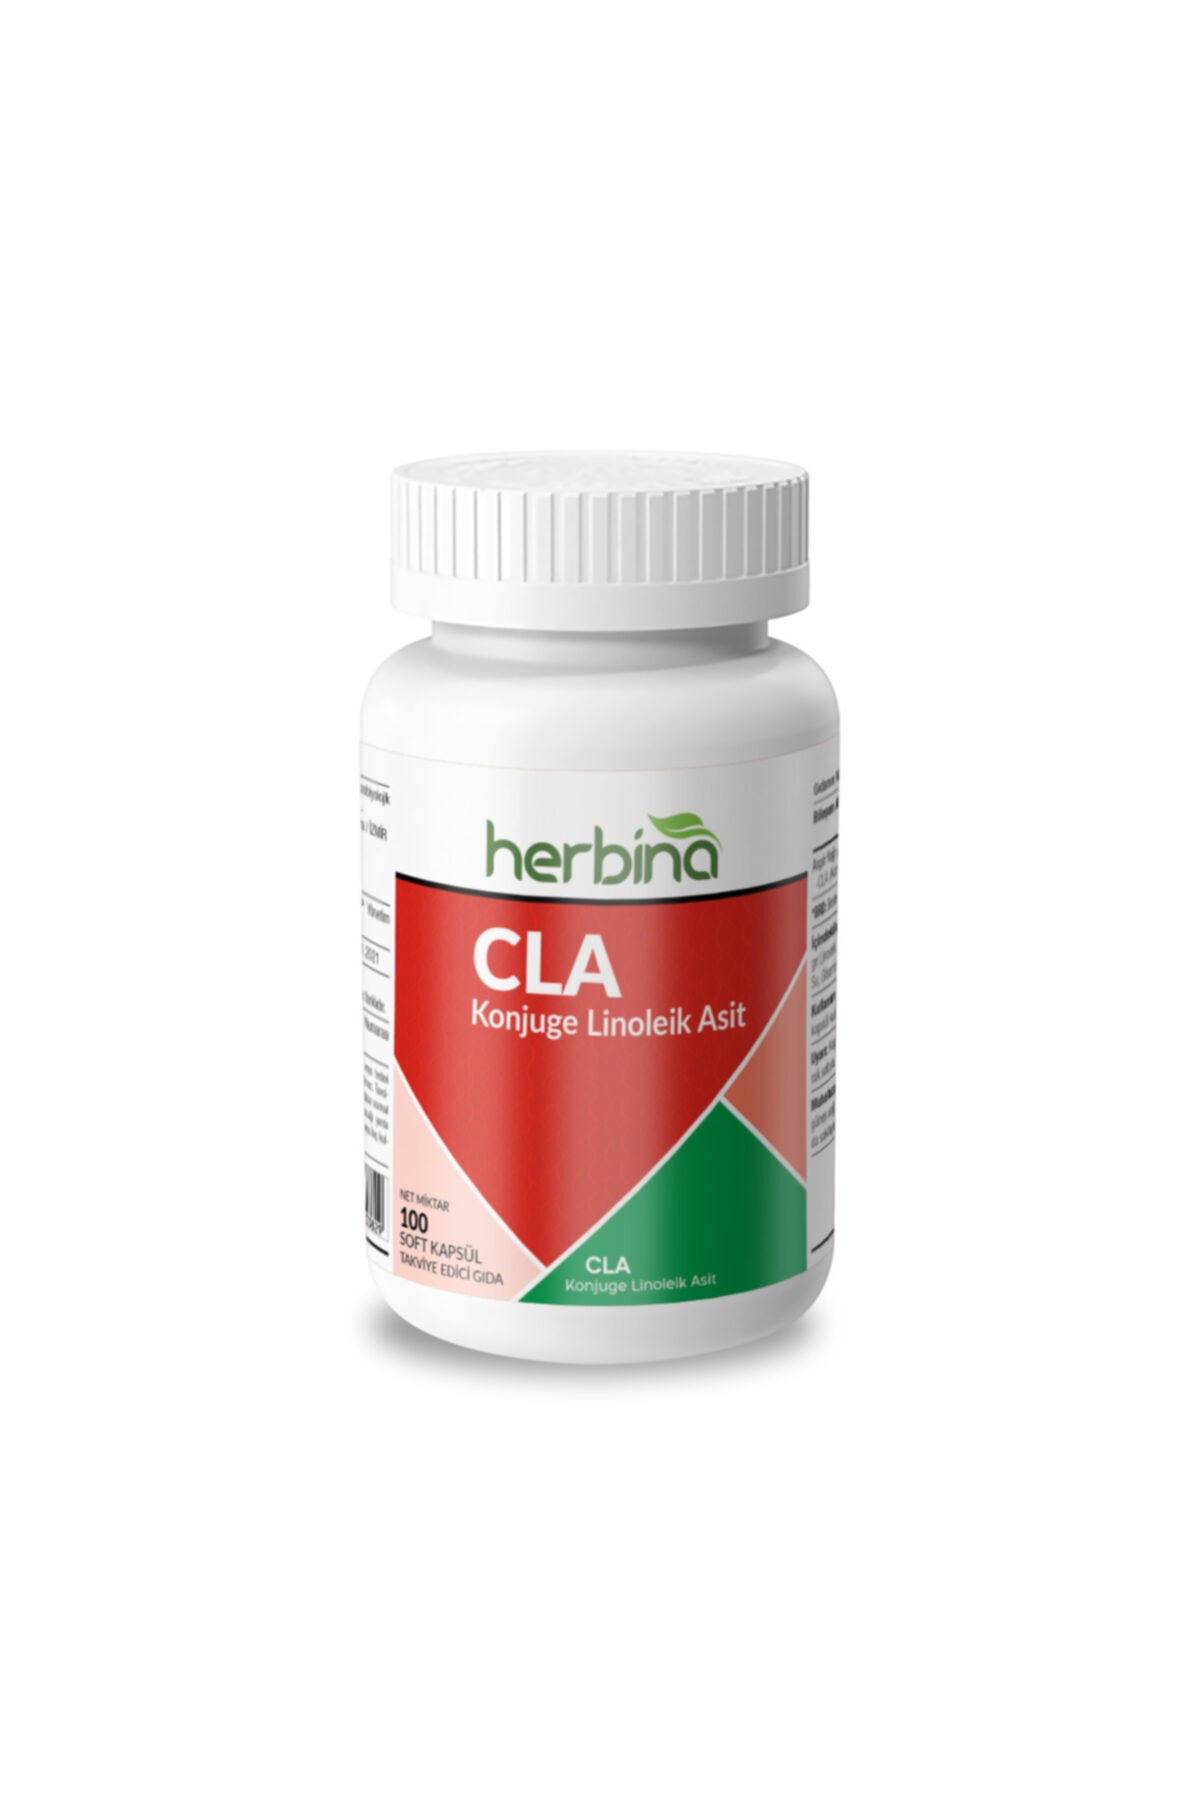 Herbina Cla Konjuge Linoleik Asit 100 Soft Kapsül